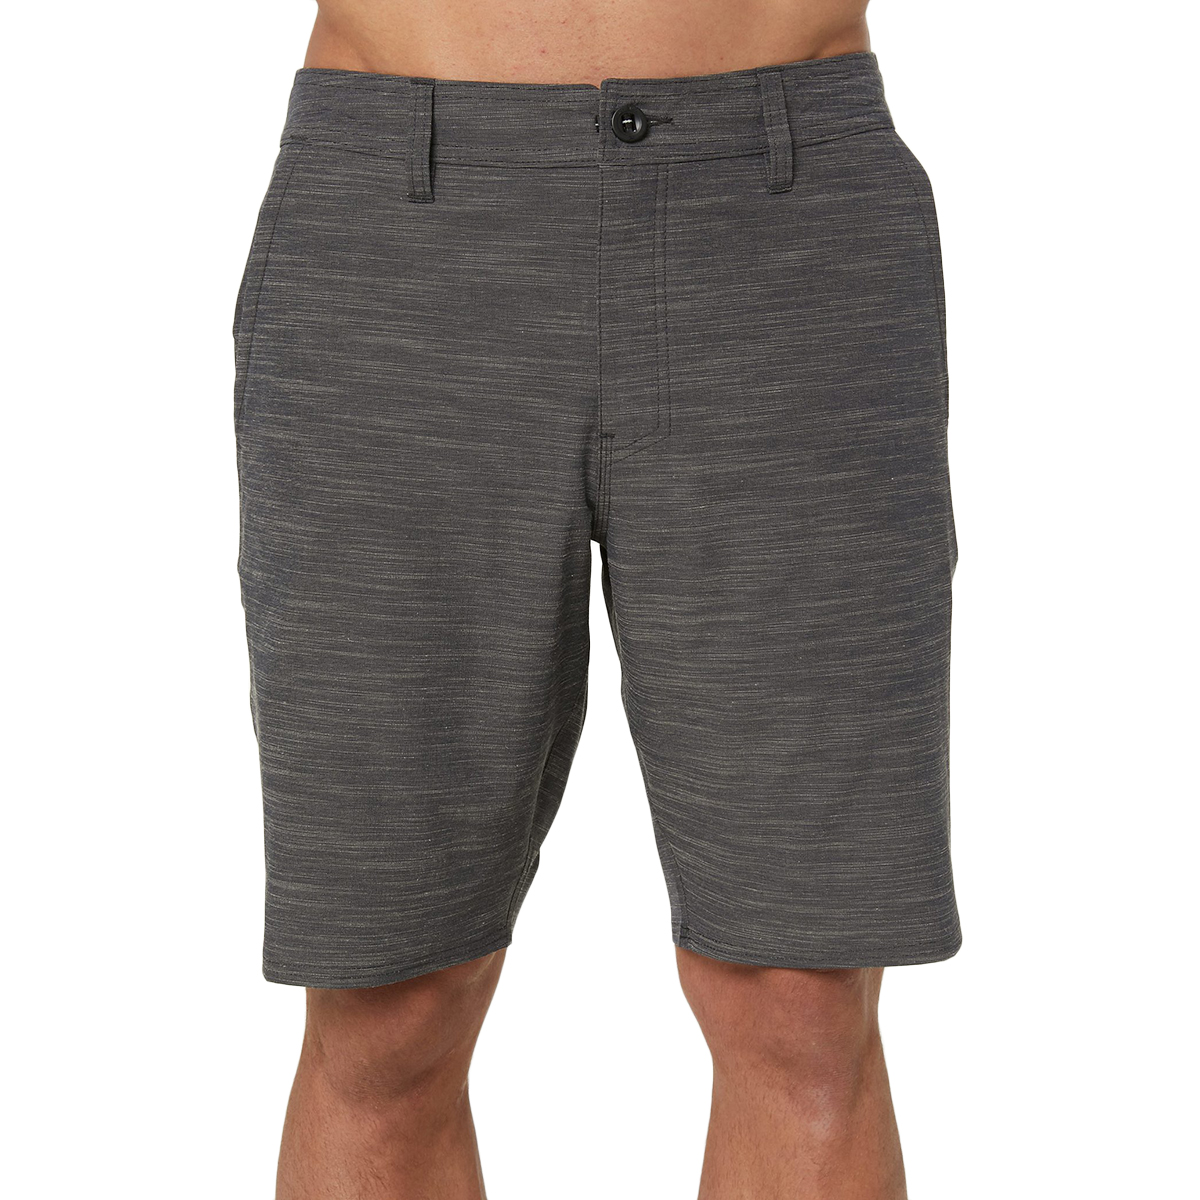 O'neill Men's Locked Slub Hybrid Shorts - Black, 36